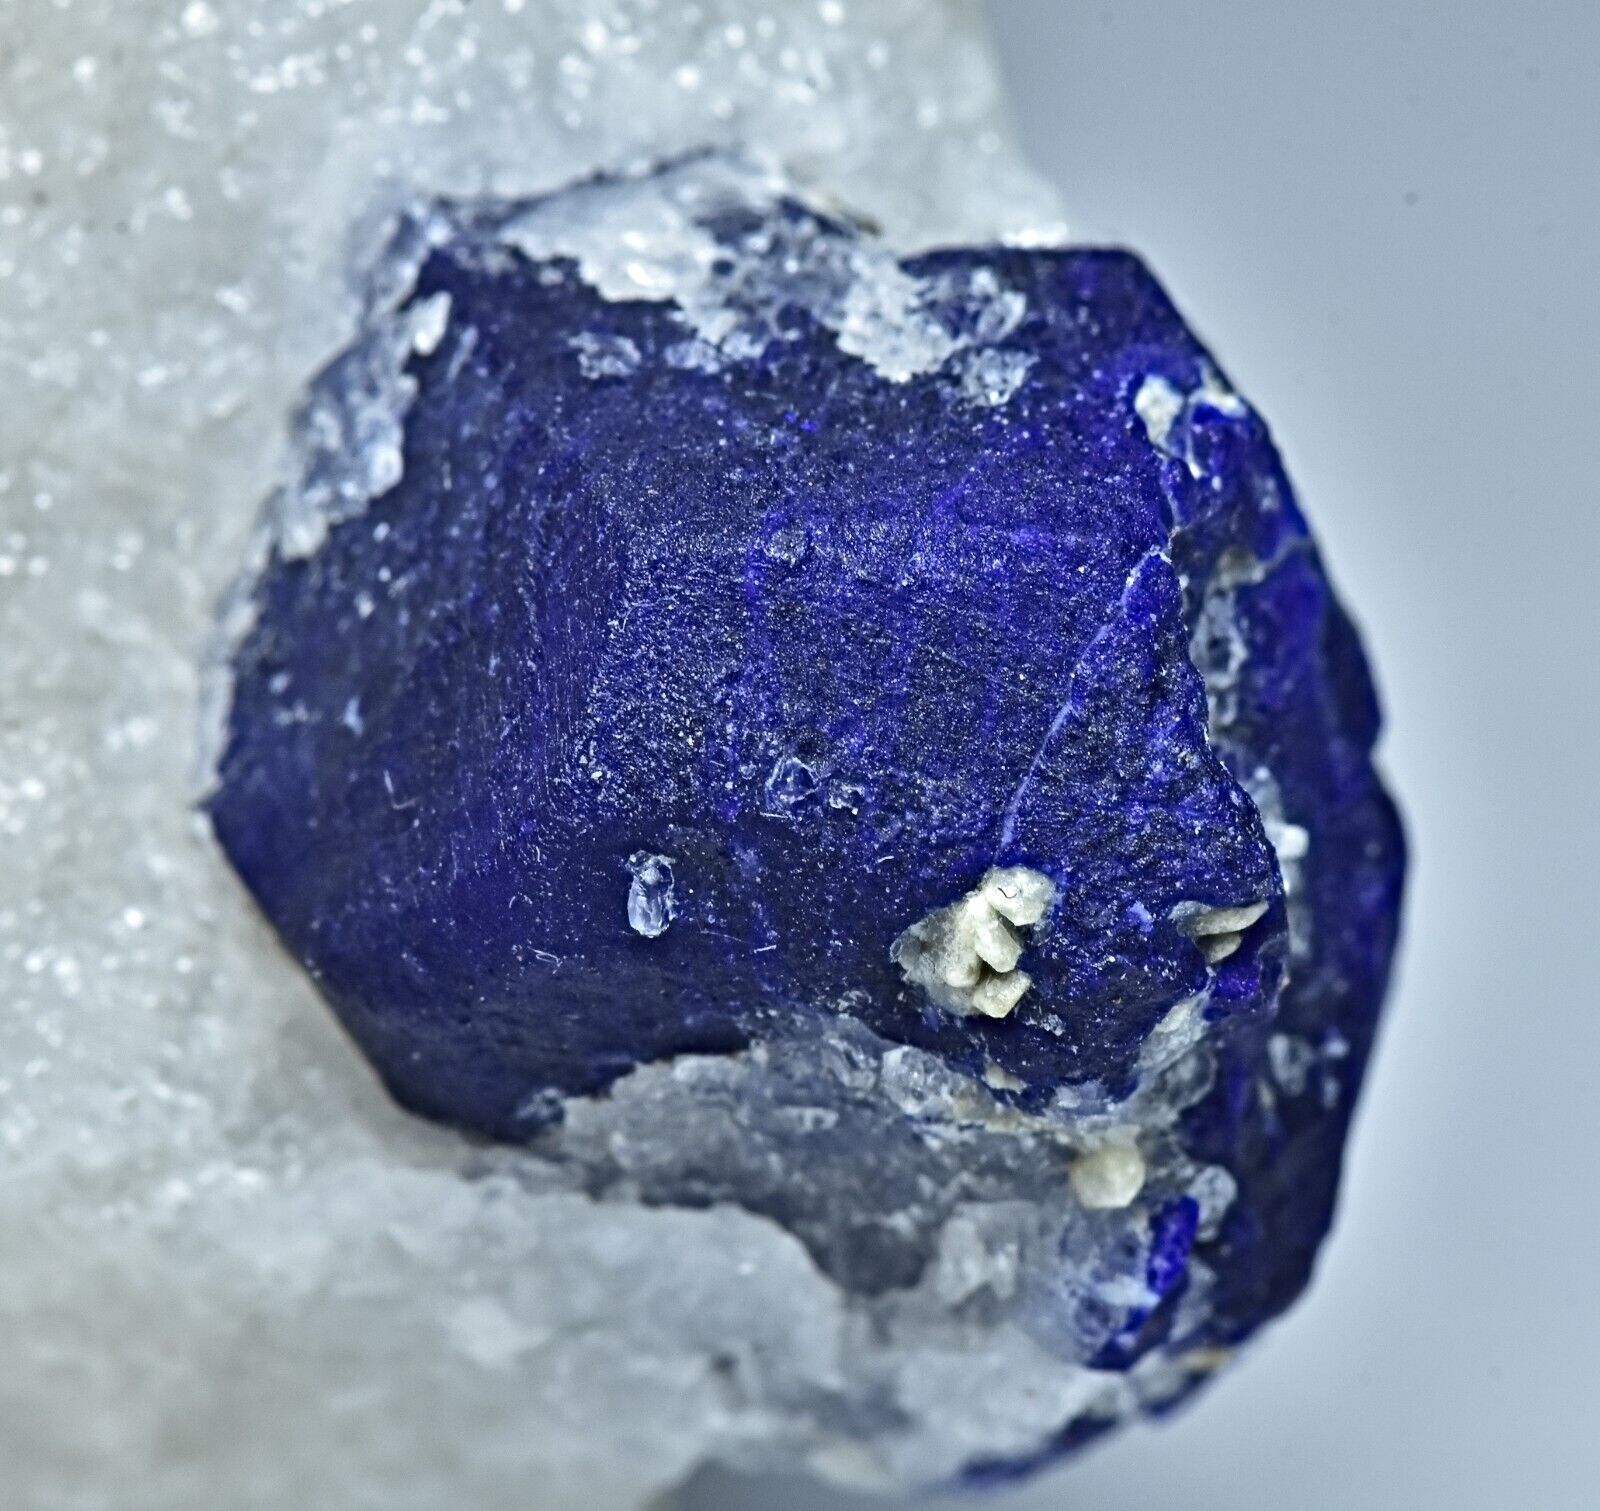 84 Gram Superb Blue Color Terminated Lazurite Crystal Specimen